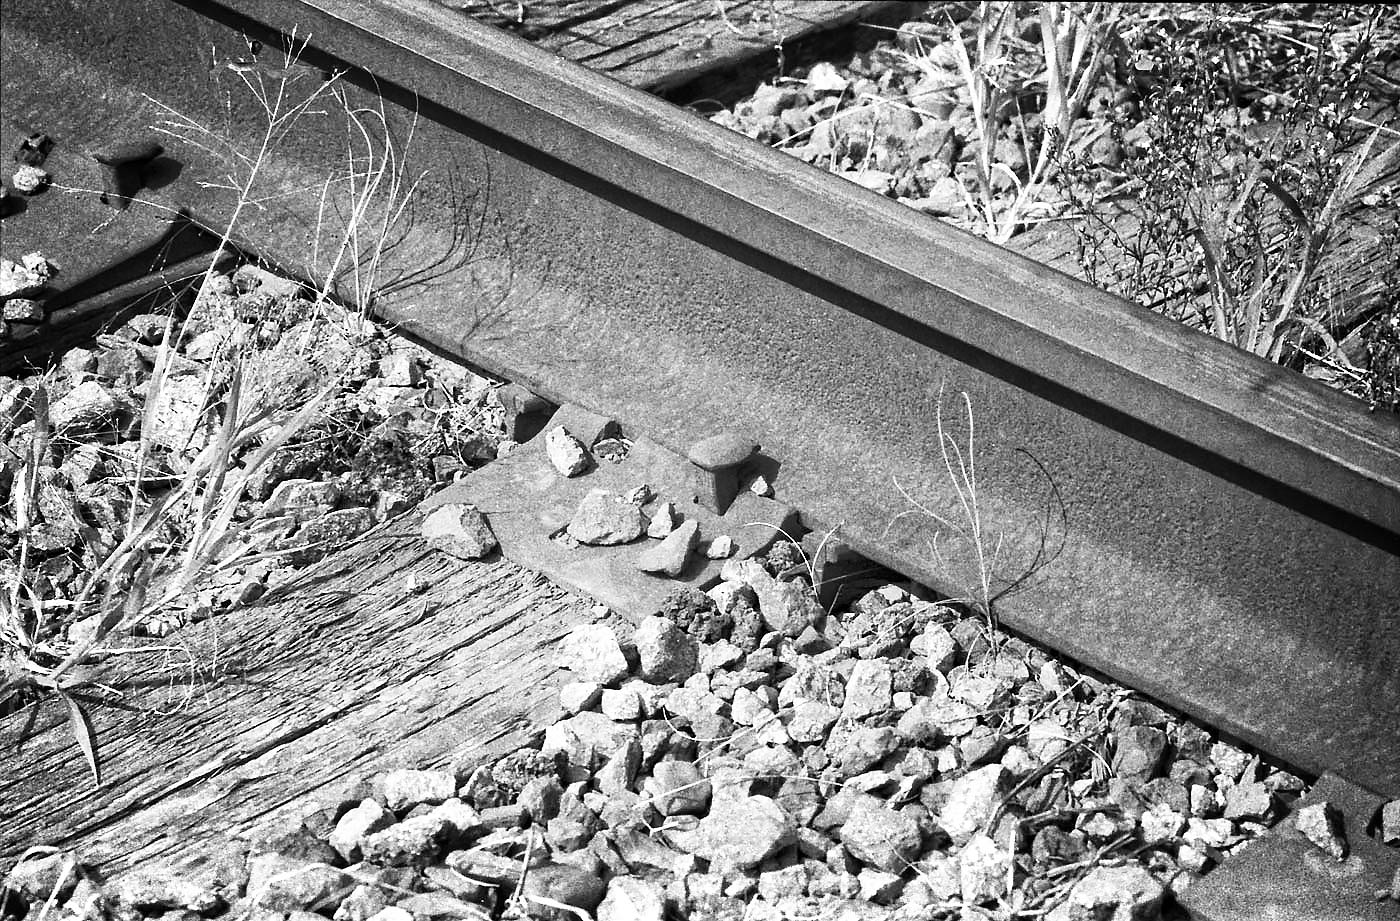 Black and White Image of Railway Tracks